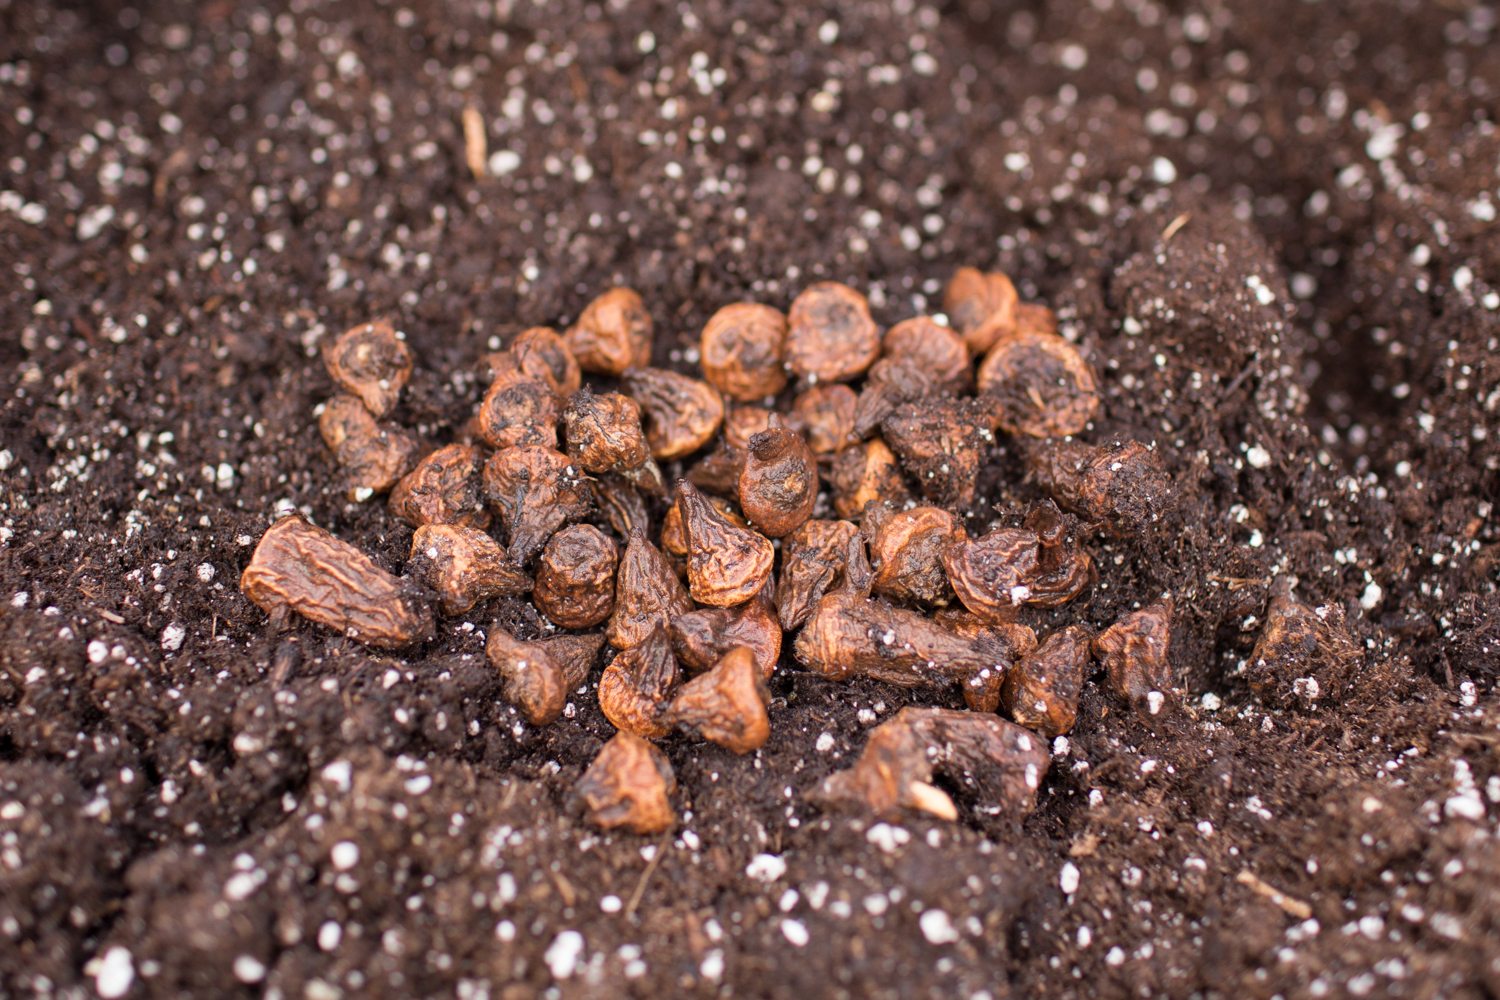 Anemone corms in potting soil